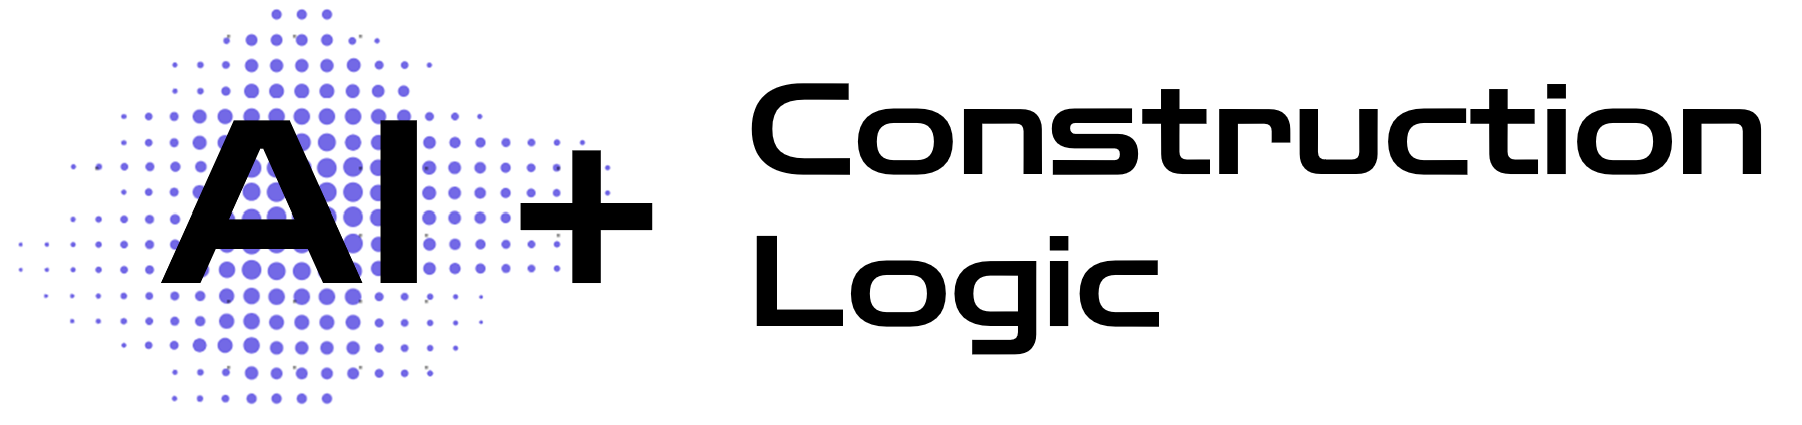 AI + Construction Logic with logo branding